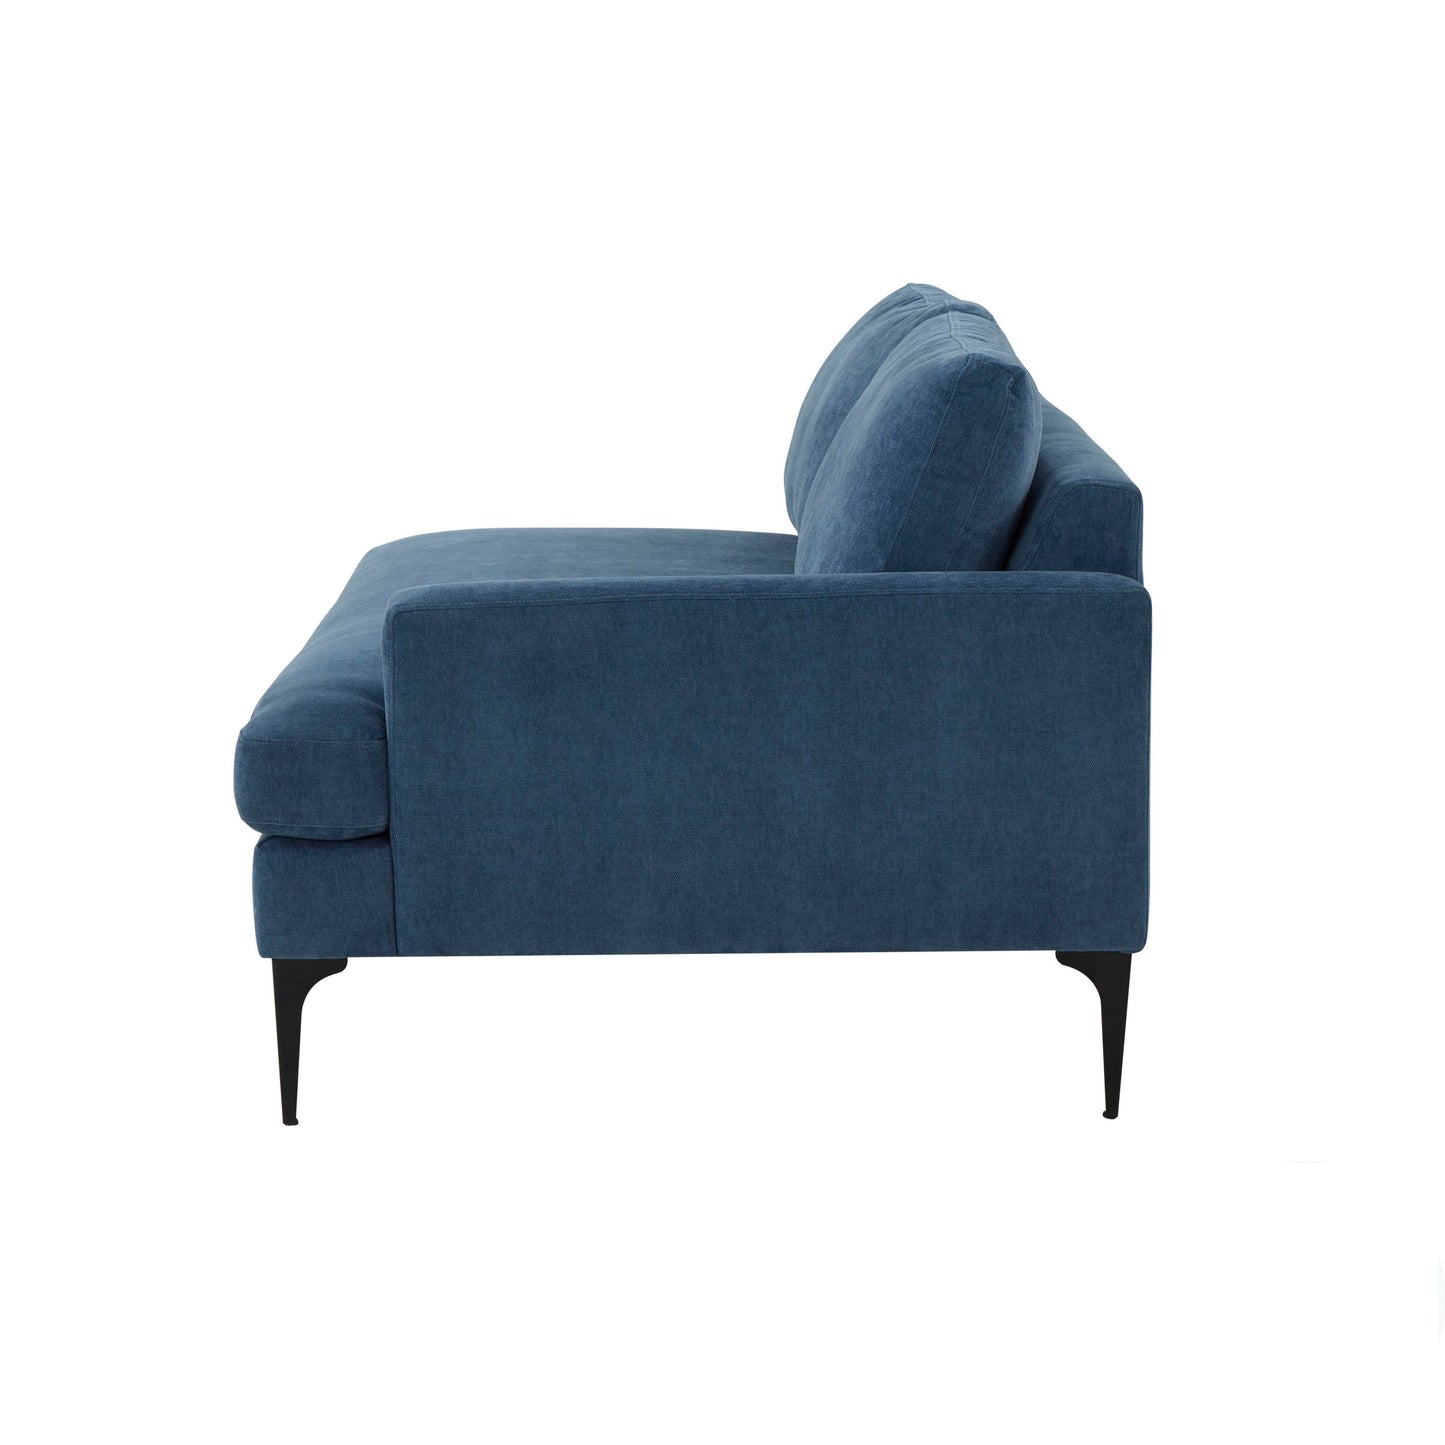 Tov Furniture Serena Blue Velvet RAF Loveseat with Black Legs